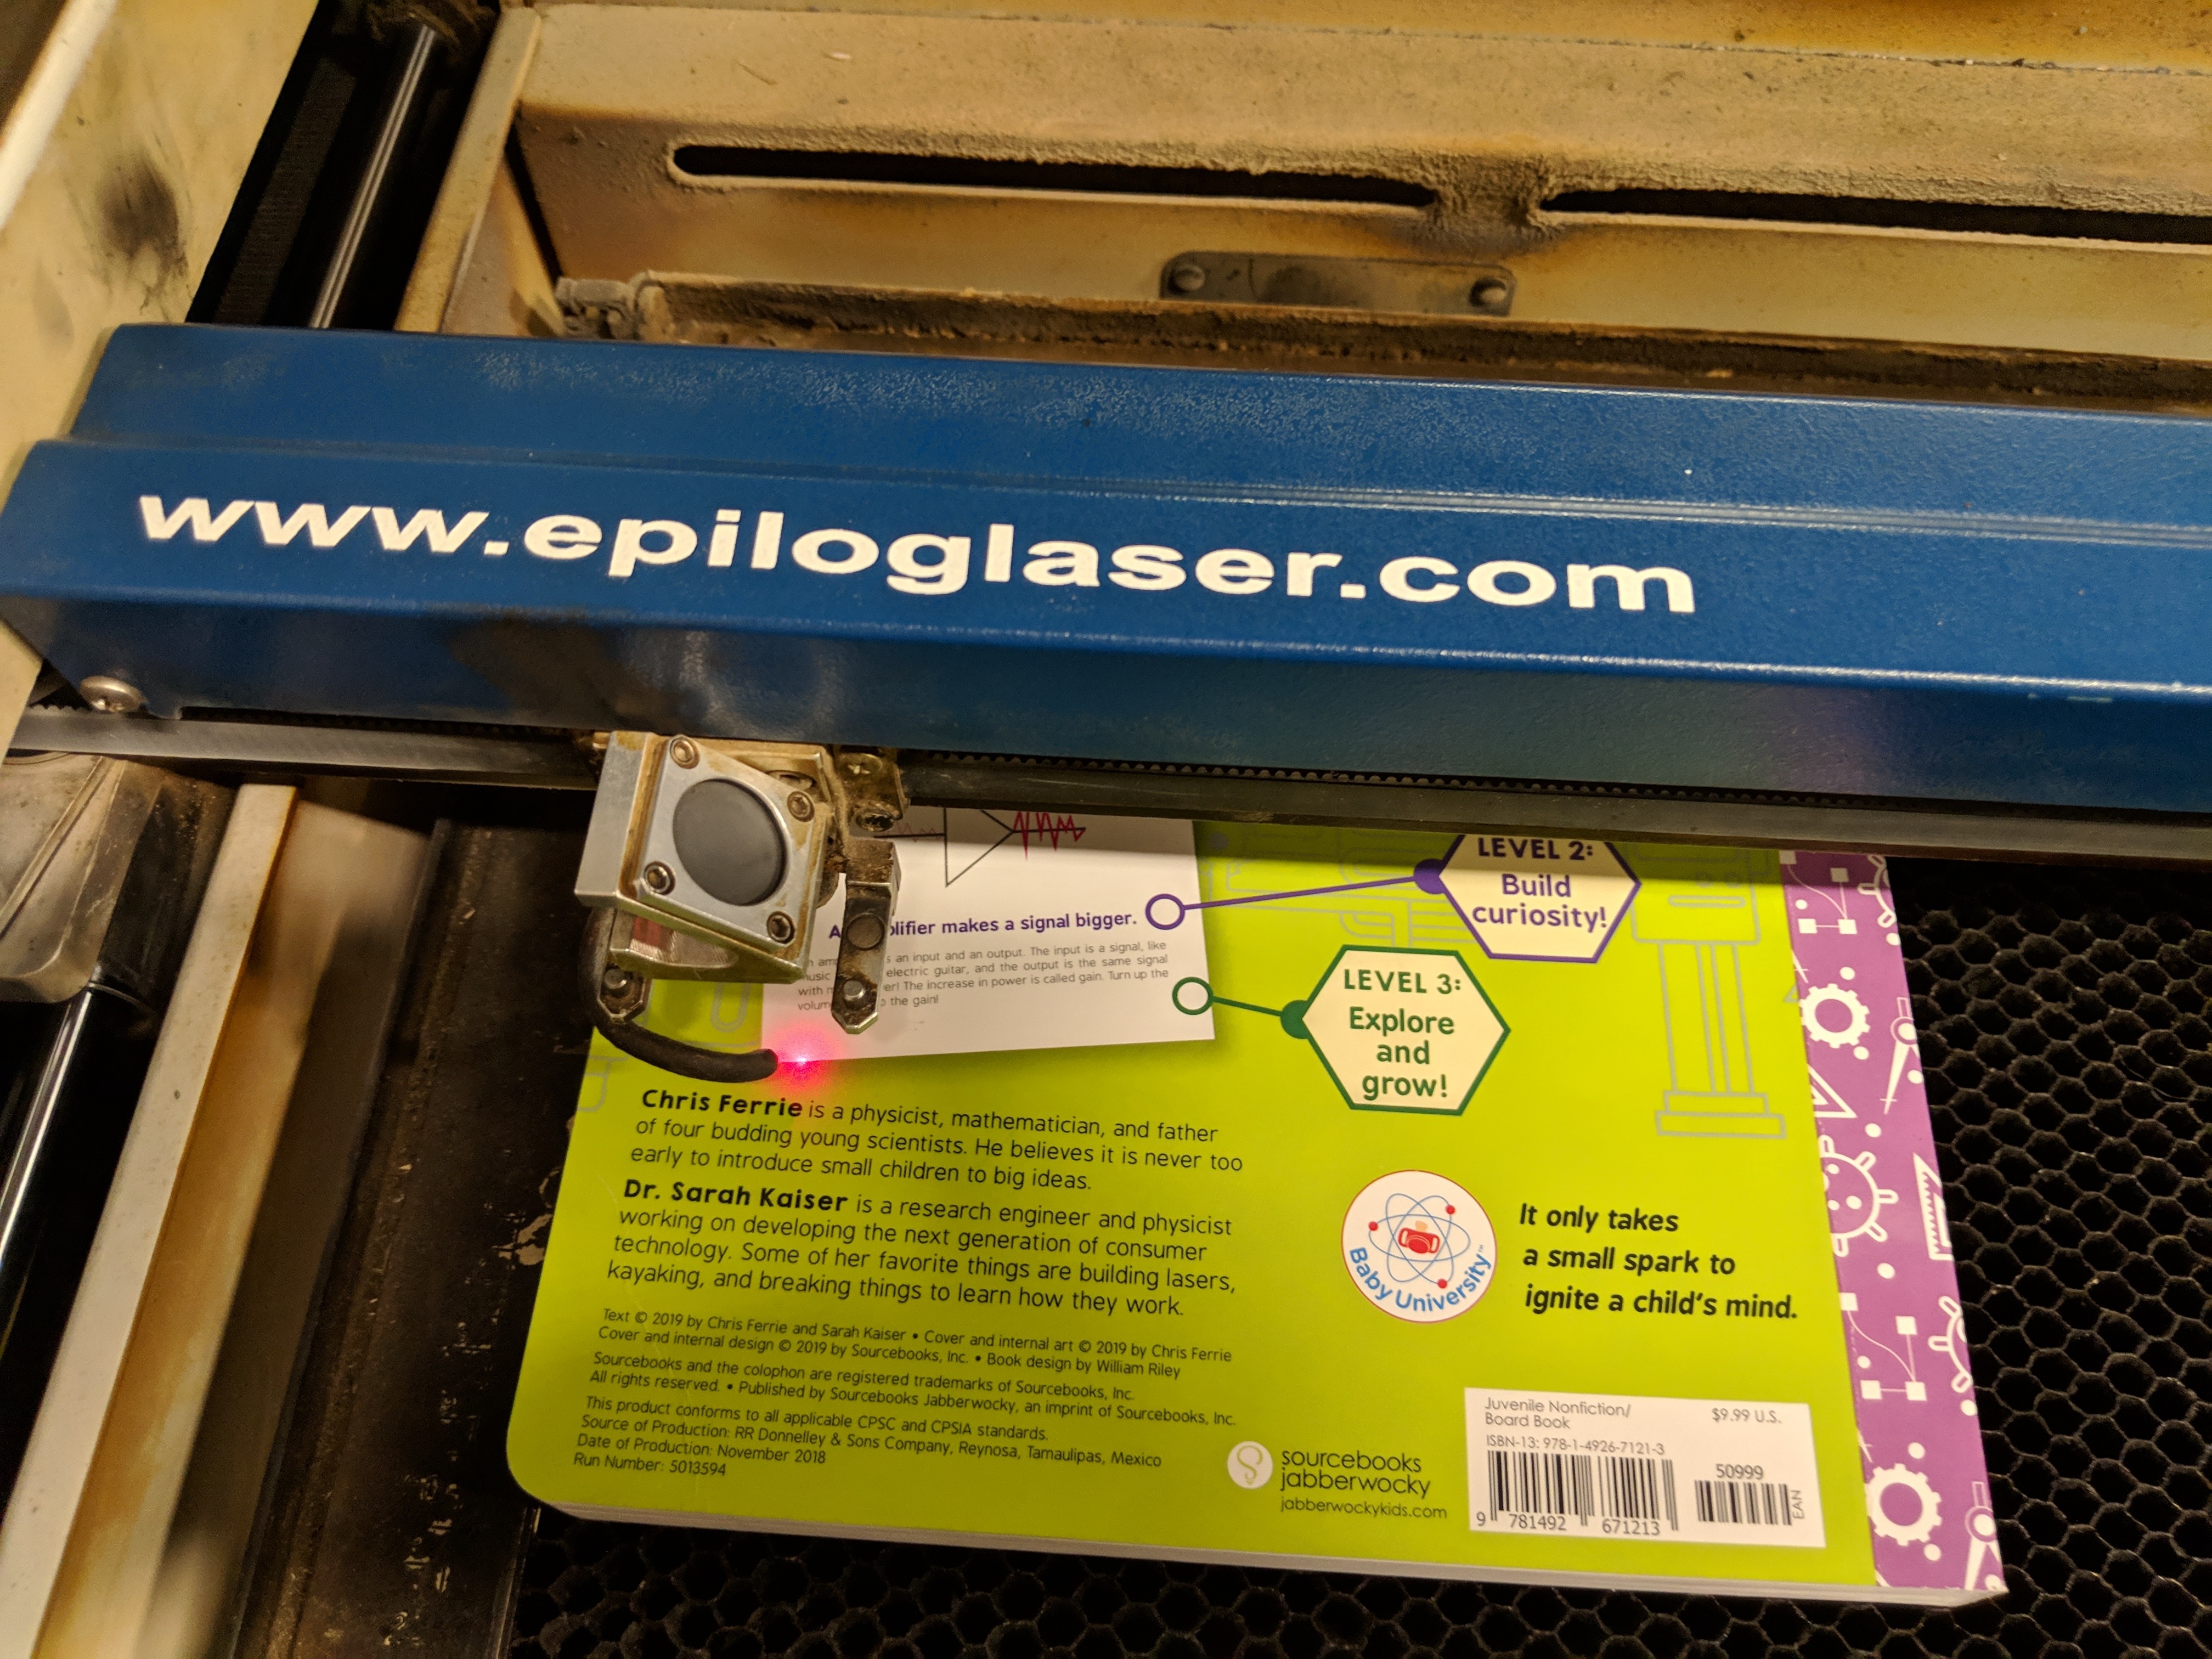 Book on laser cutter